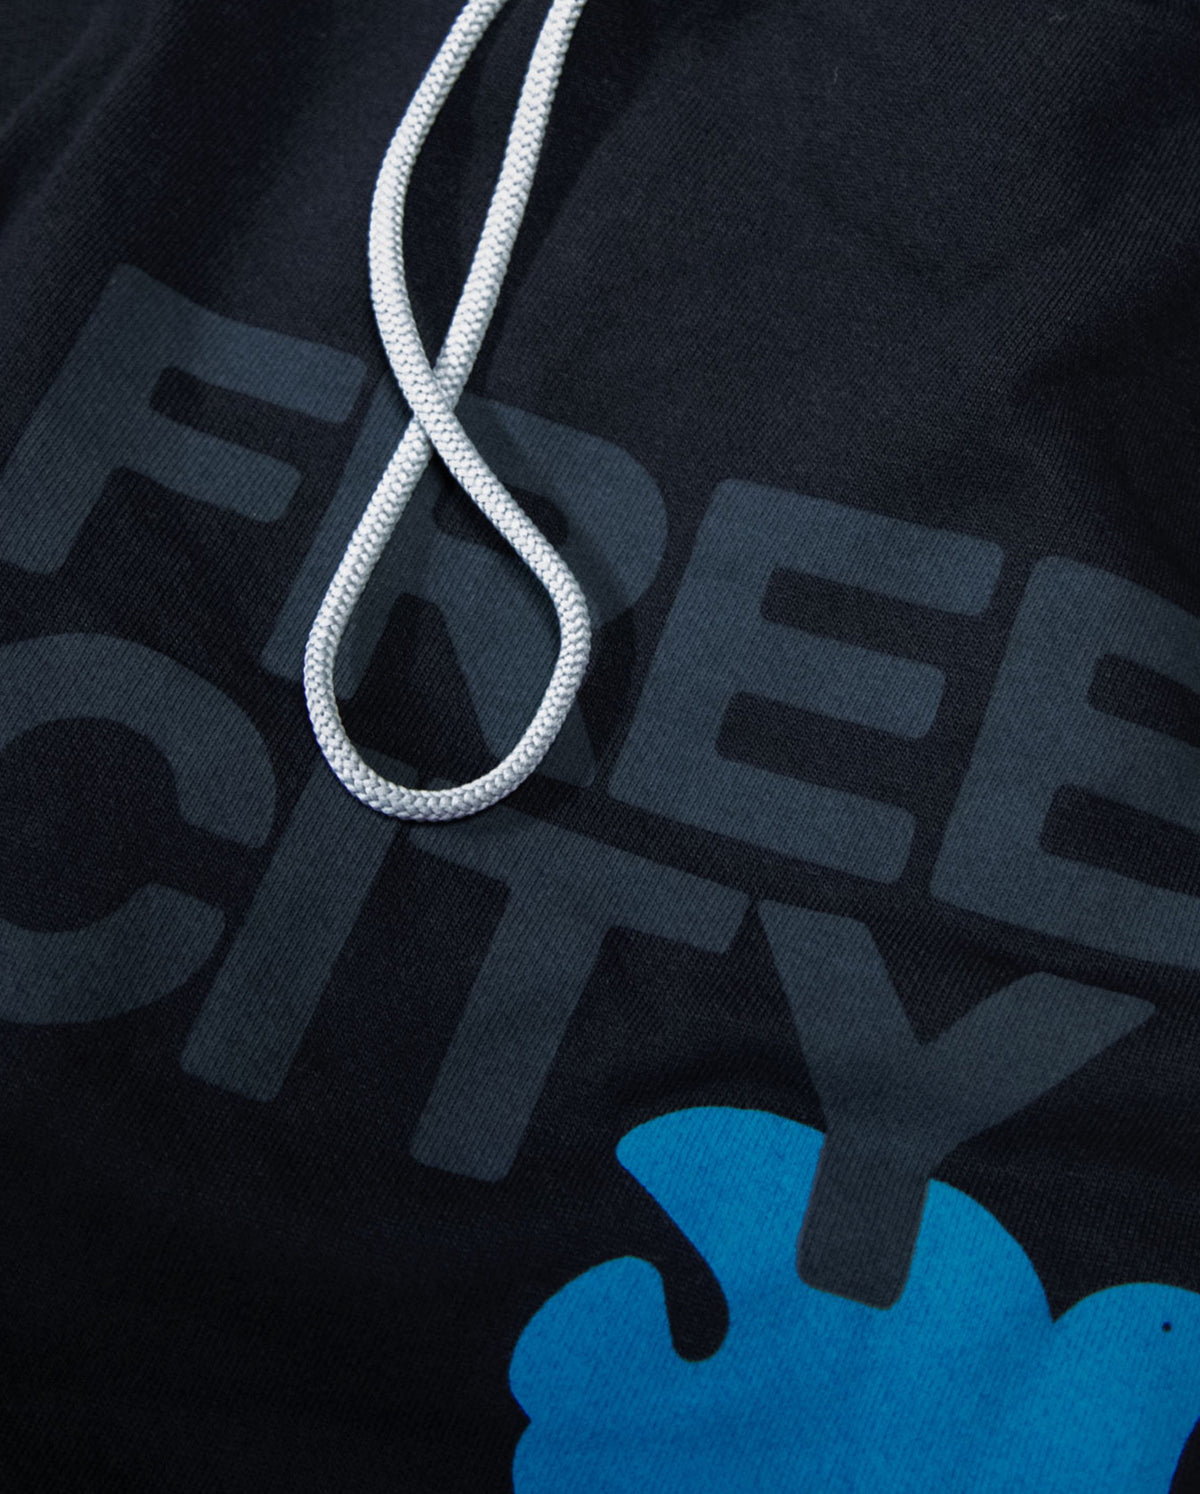 Freecity Large Sweats - Super Black/Blue